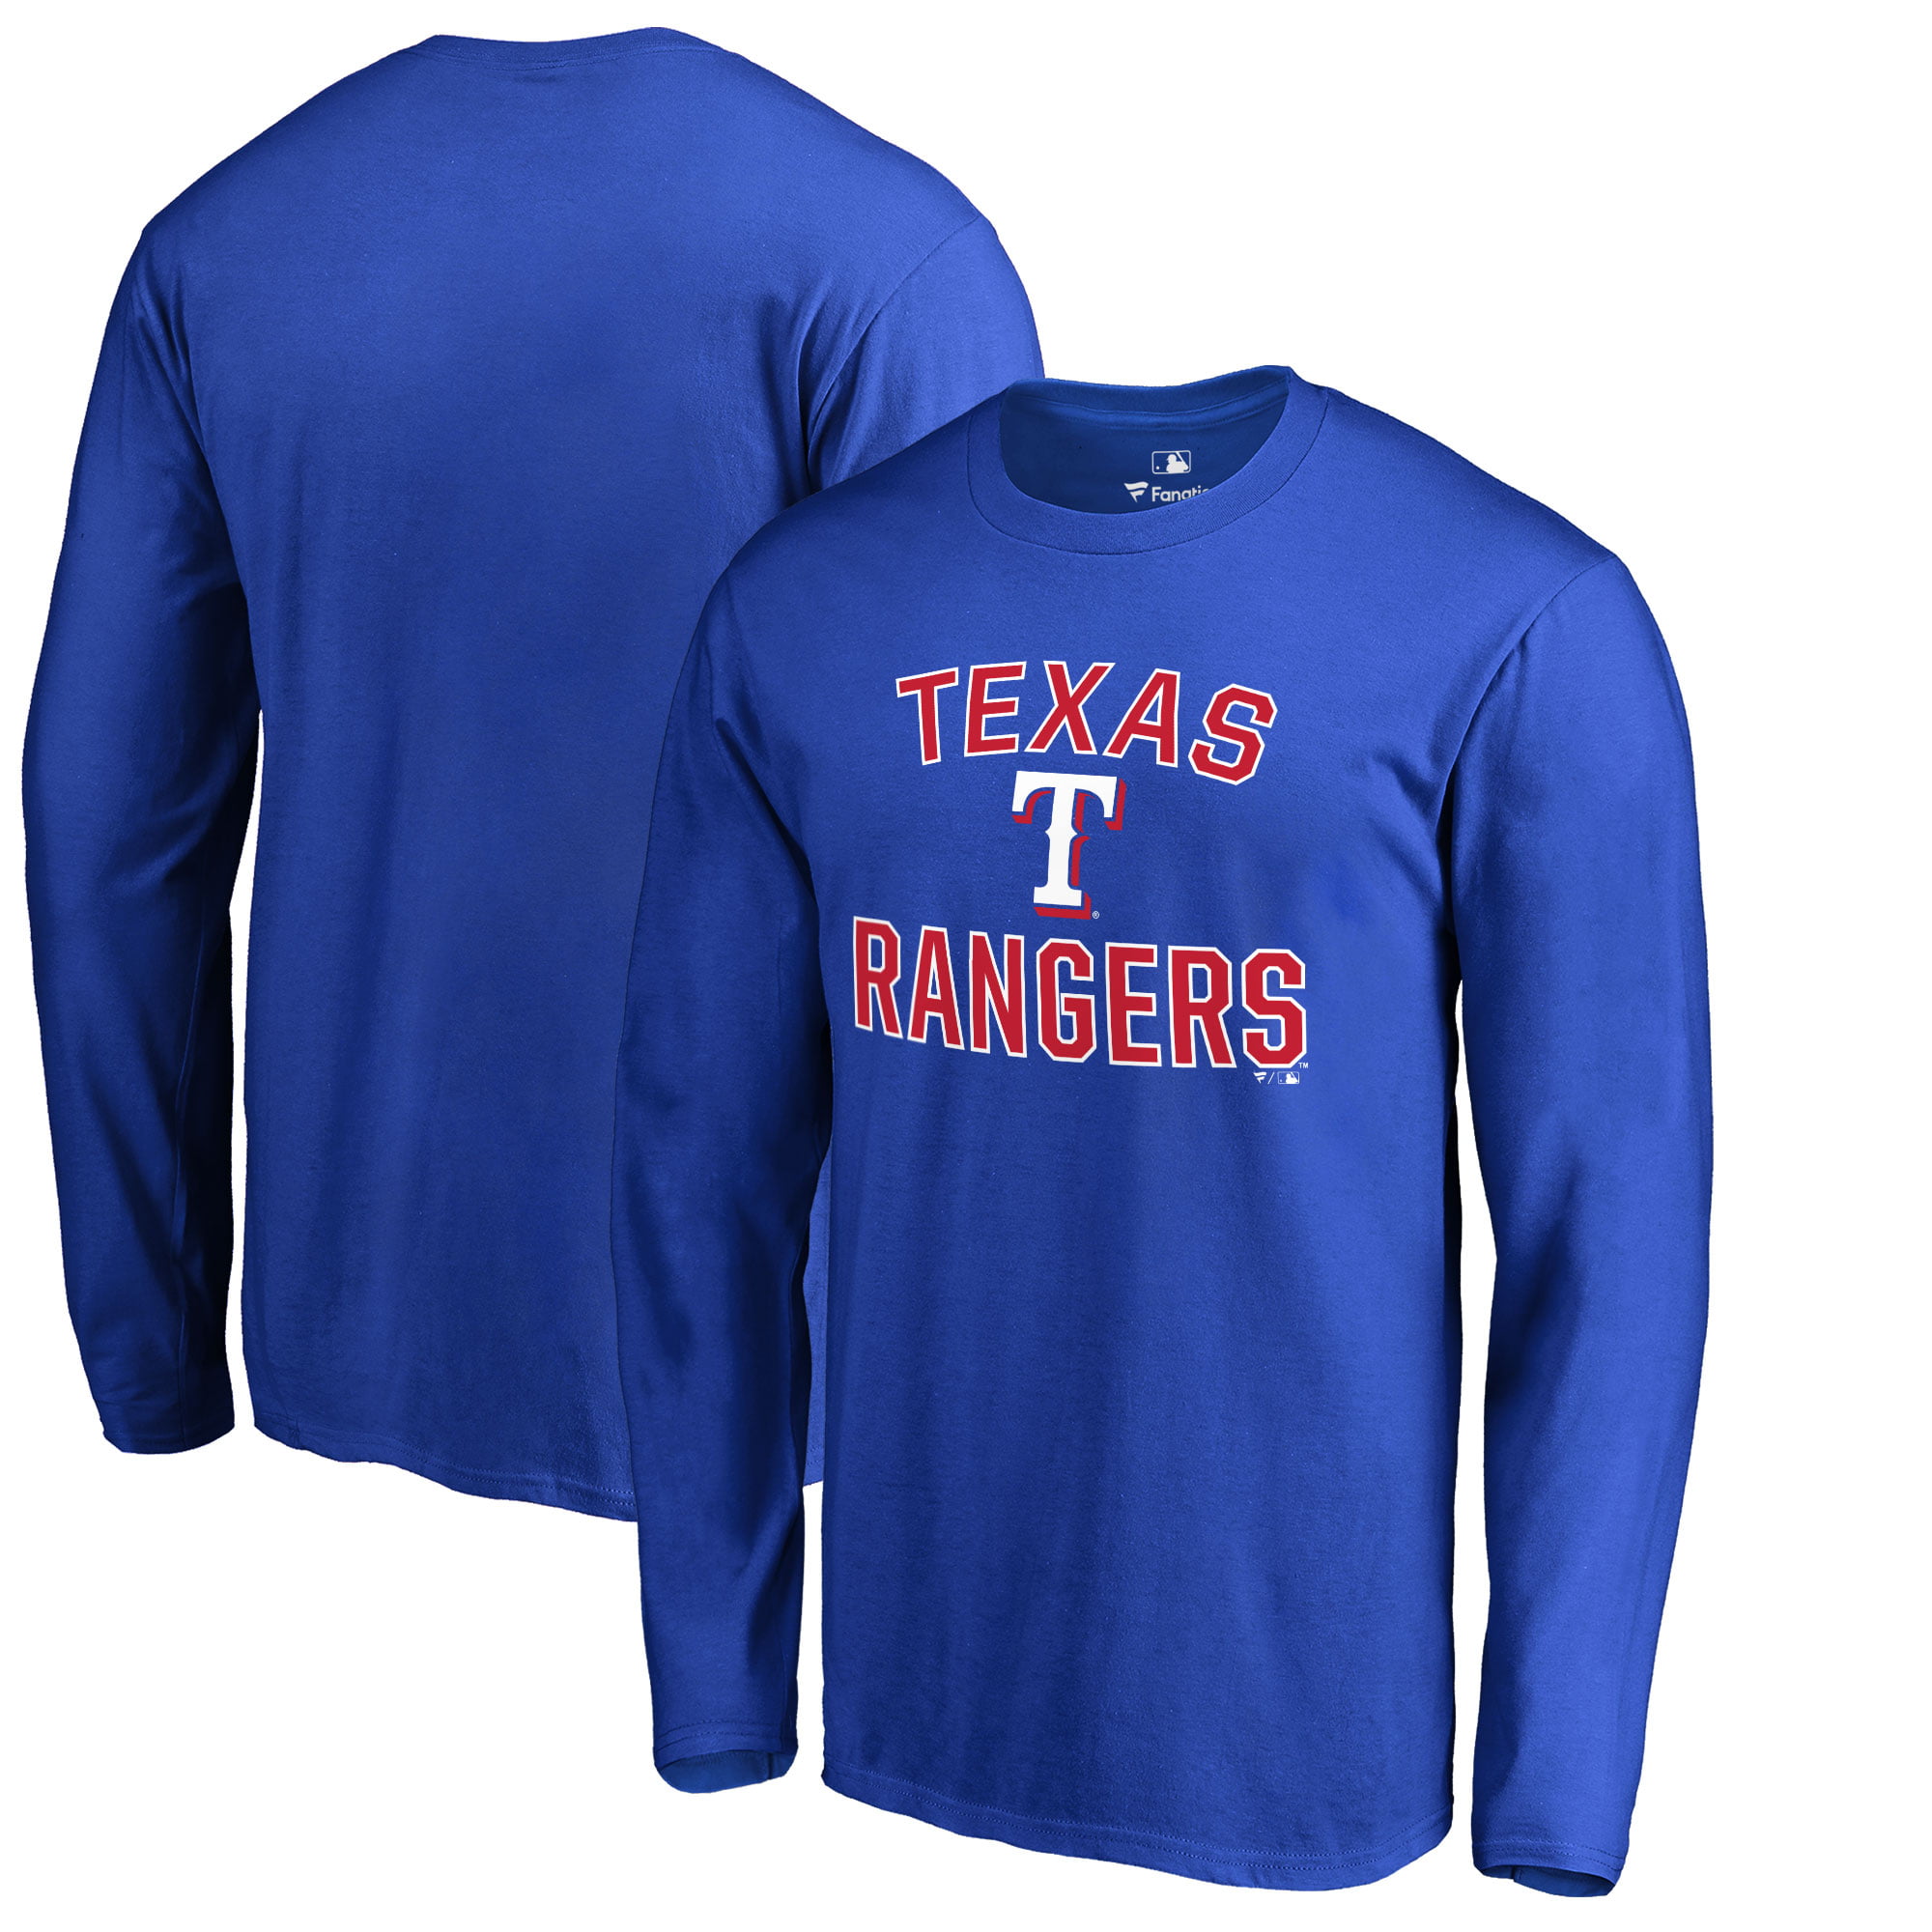 Texas Rangers Victory Arch Big & Tall Long Sleeve TShirt Royal